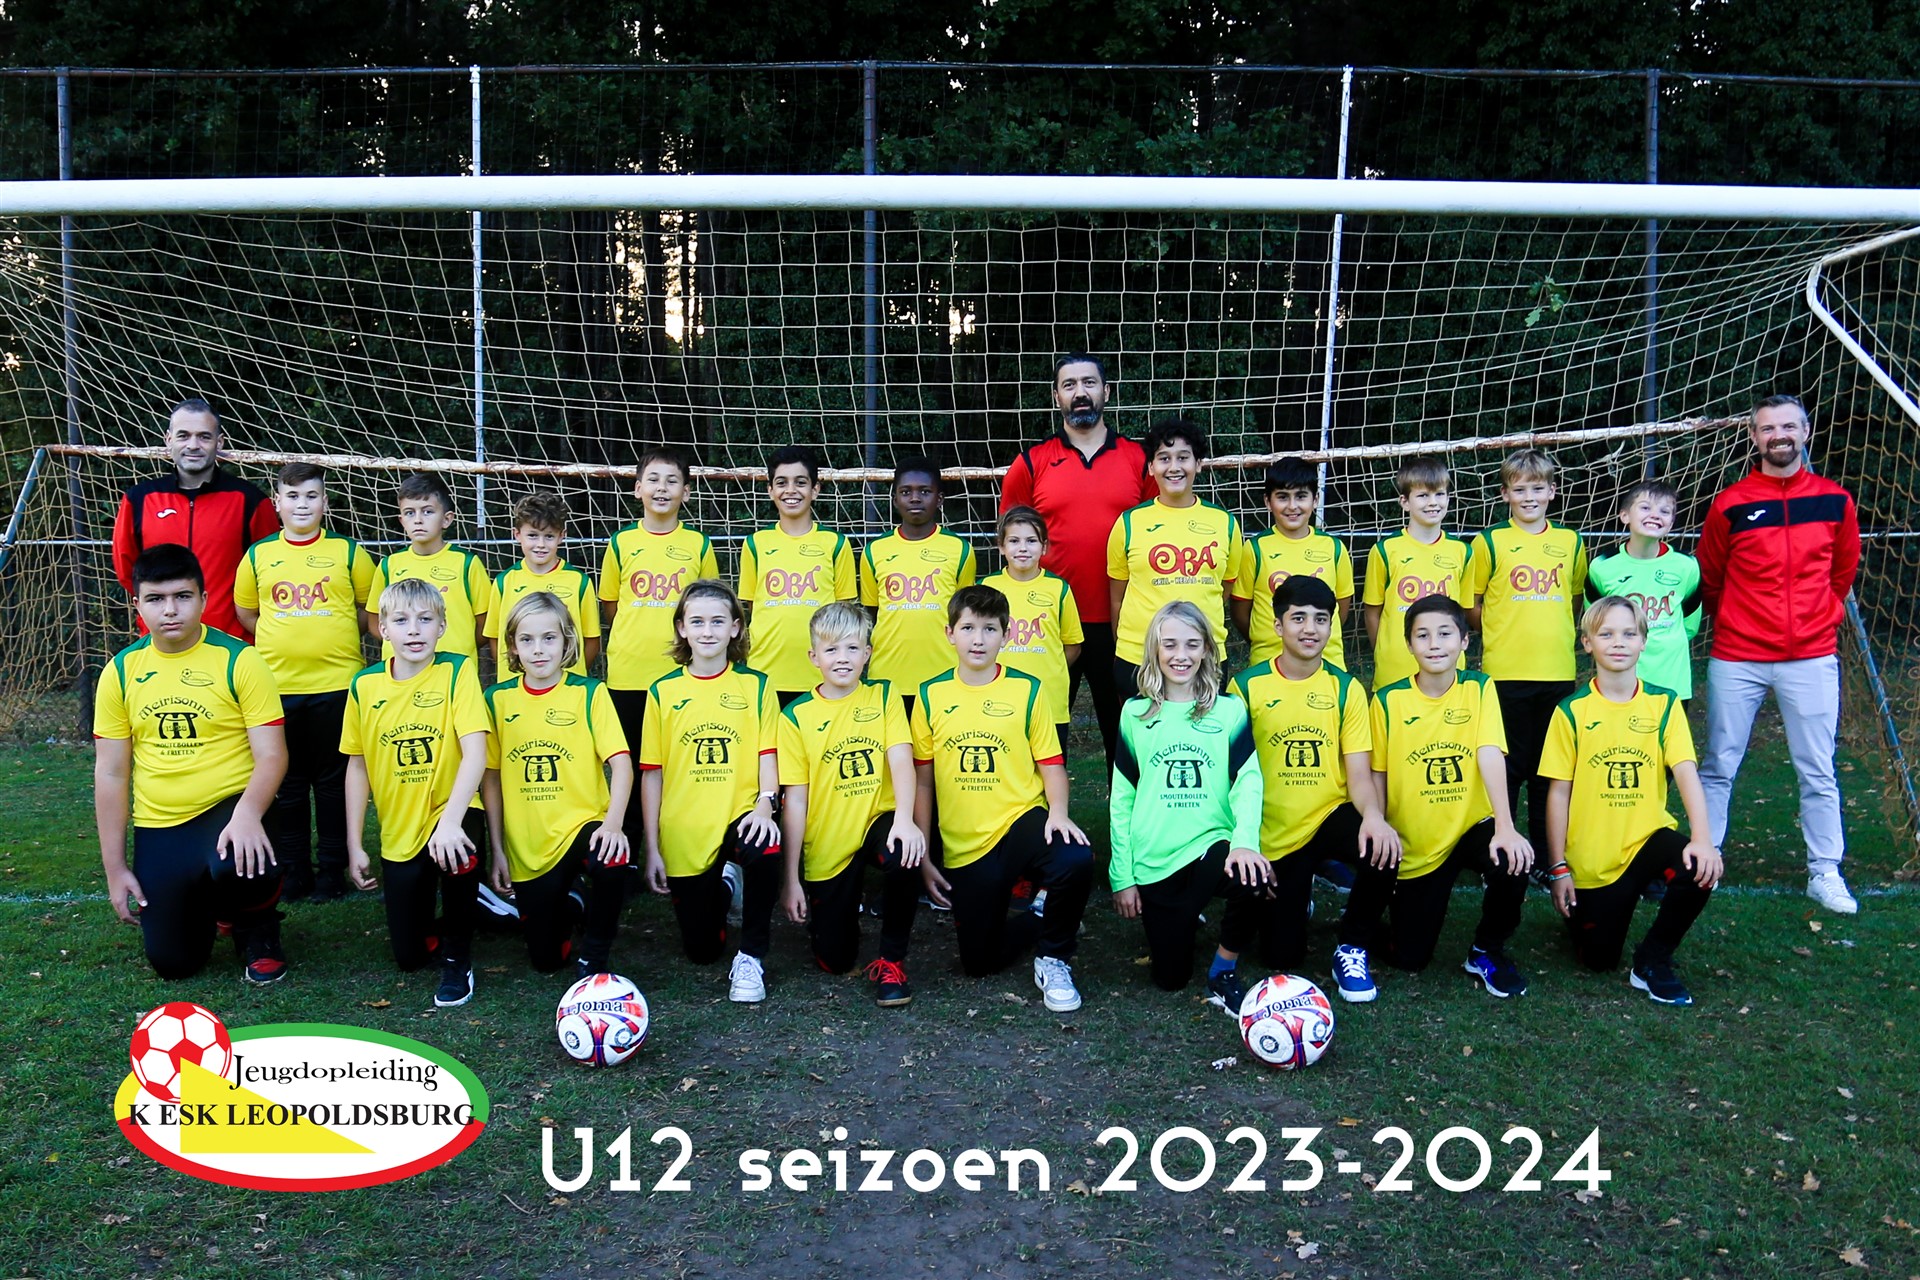 U12 ploegfoto jeugdopleiding voetbalclub K.ESK Leopoldsburg